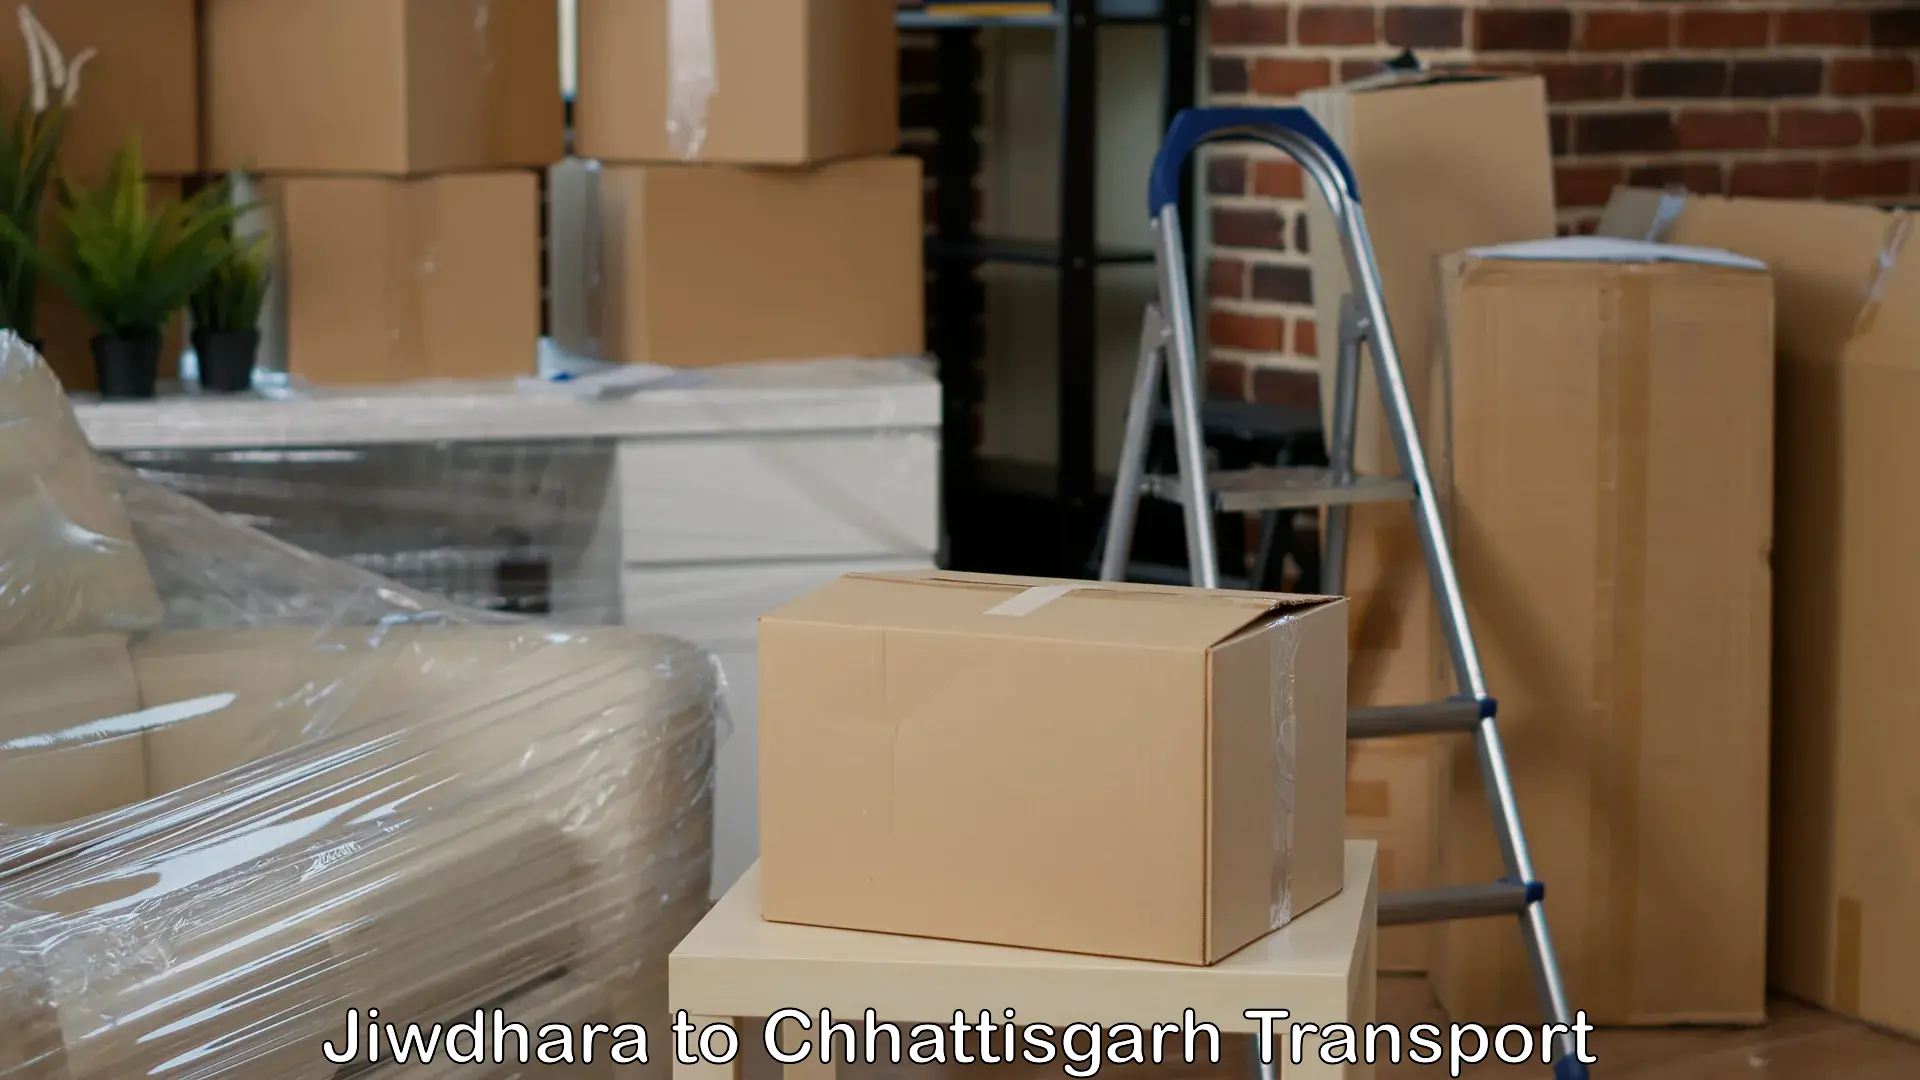 Delivery service Jiwdhara to Chhattisgarh